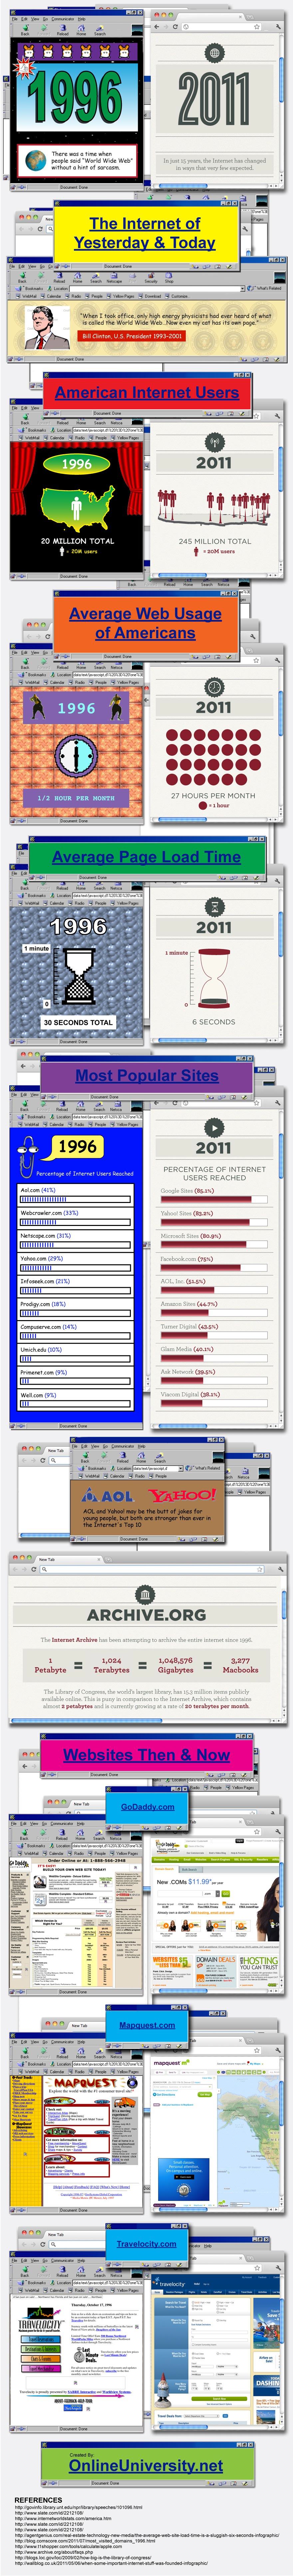 Internet 1996 vs. Internet 2011 [Infographic]